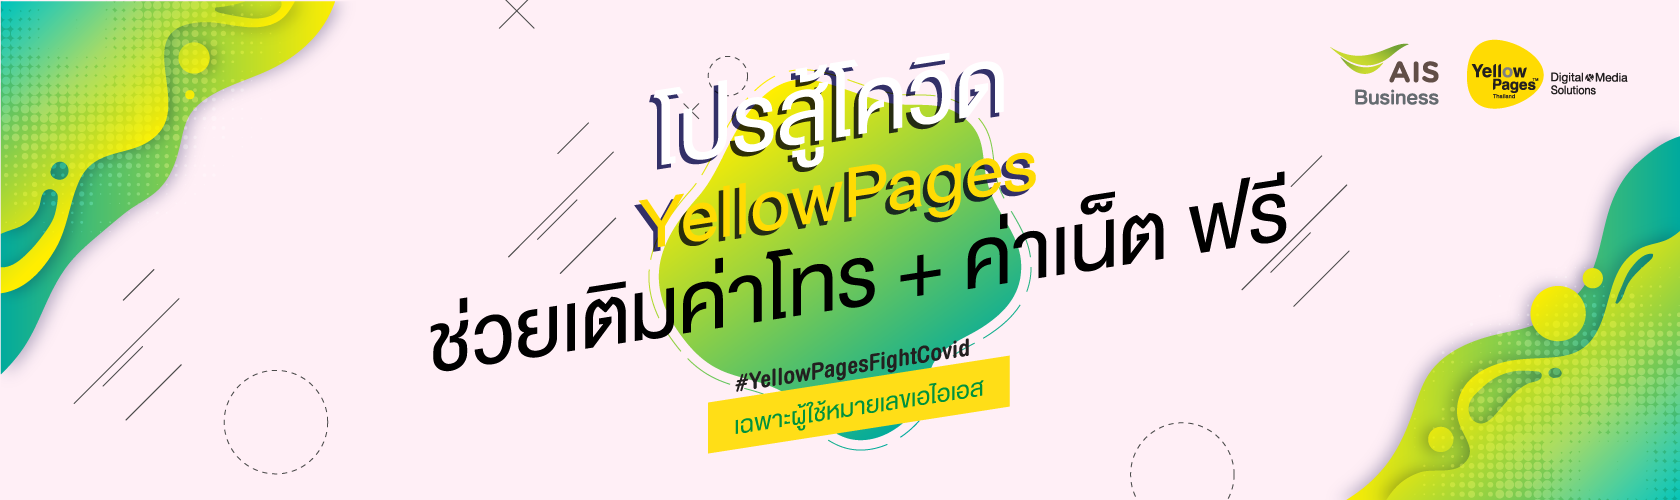 YellowPages ร่วมกับ AIS มอบโปรโมชั่นพิเศษ เพื่อผู้ประกอบการสู้โควิดไปด้วยกัน